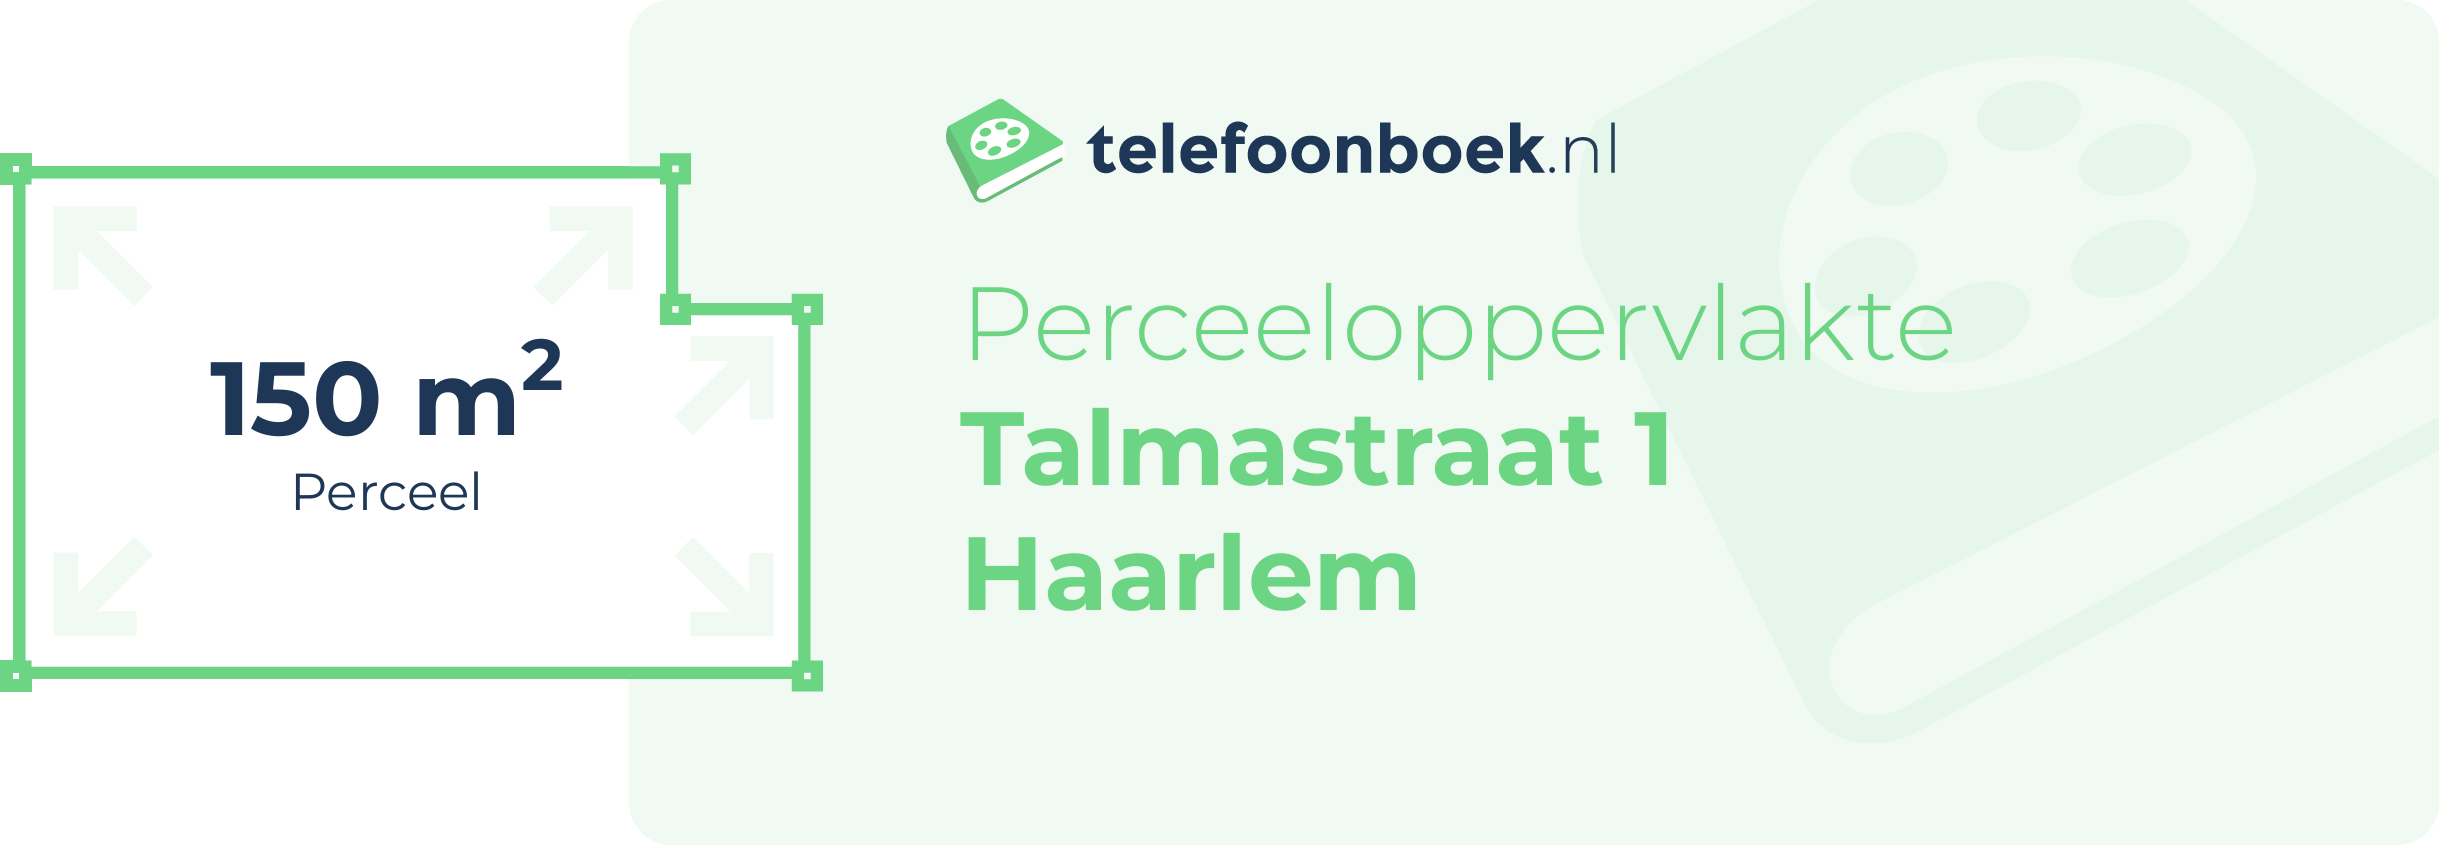 Perceeloppervlakte Talmastraat 1 Haarlem